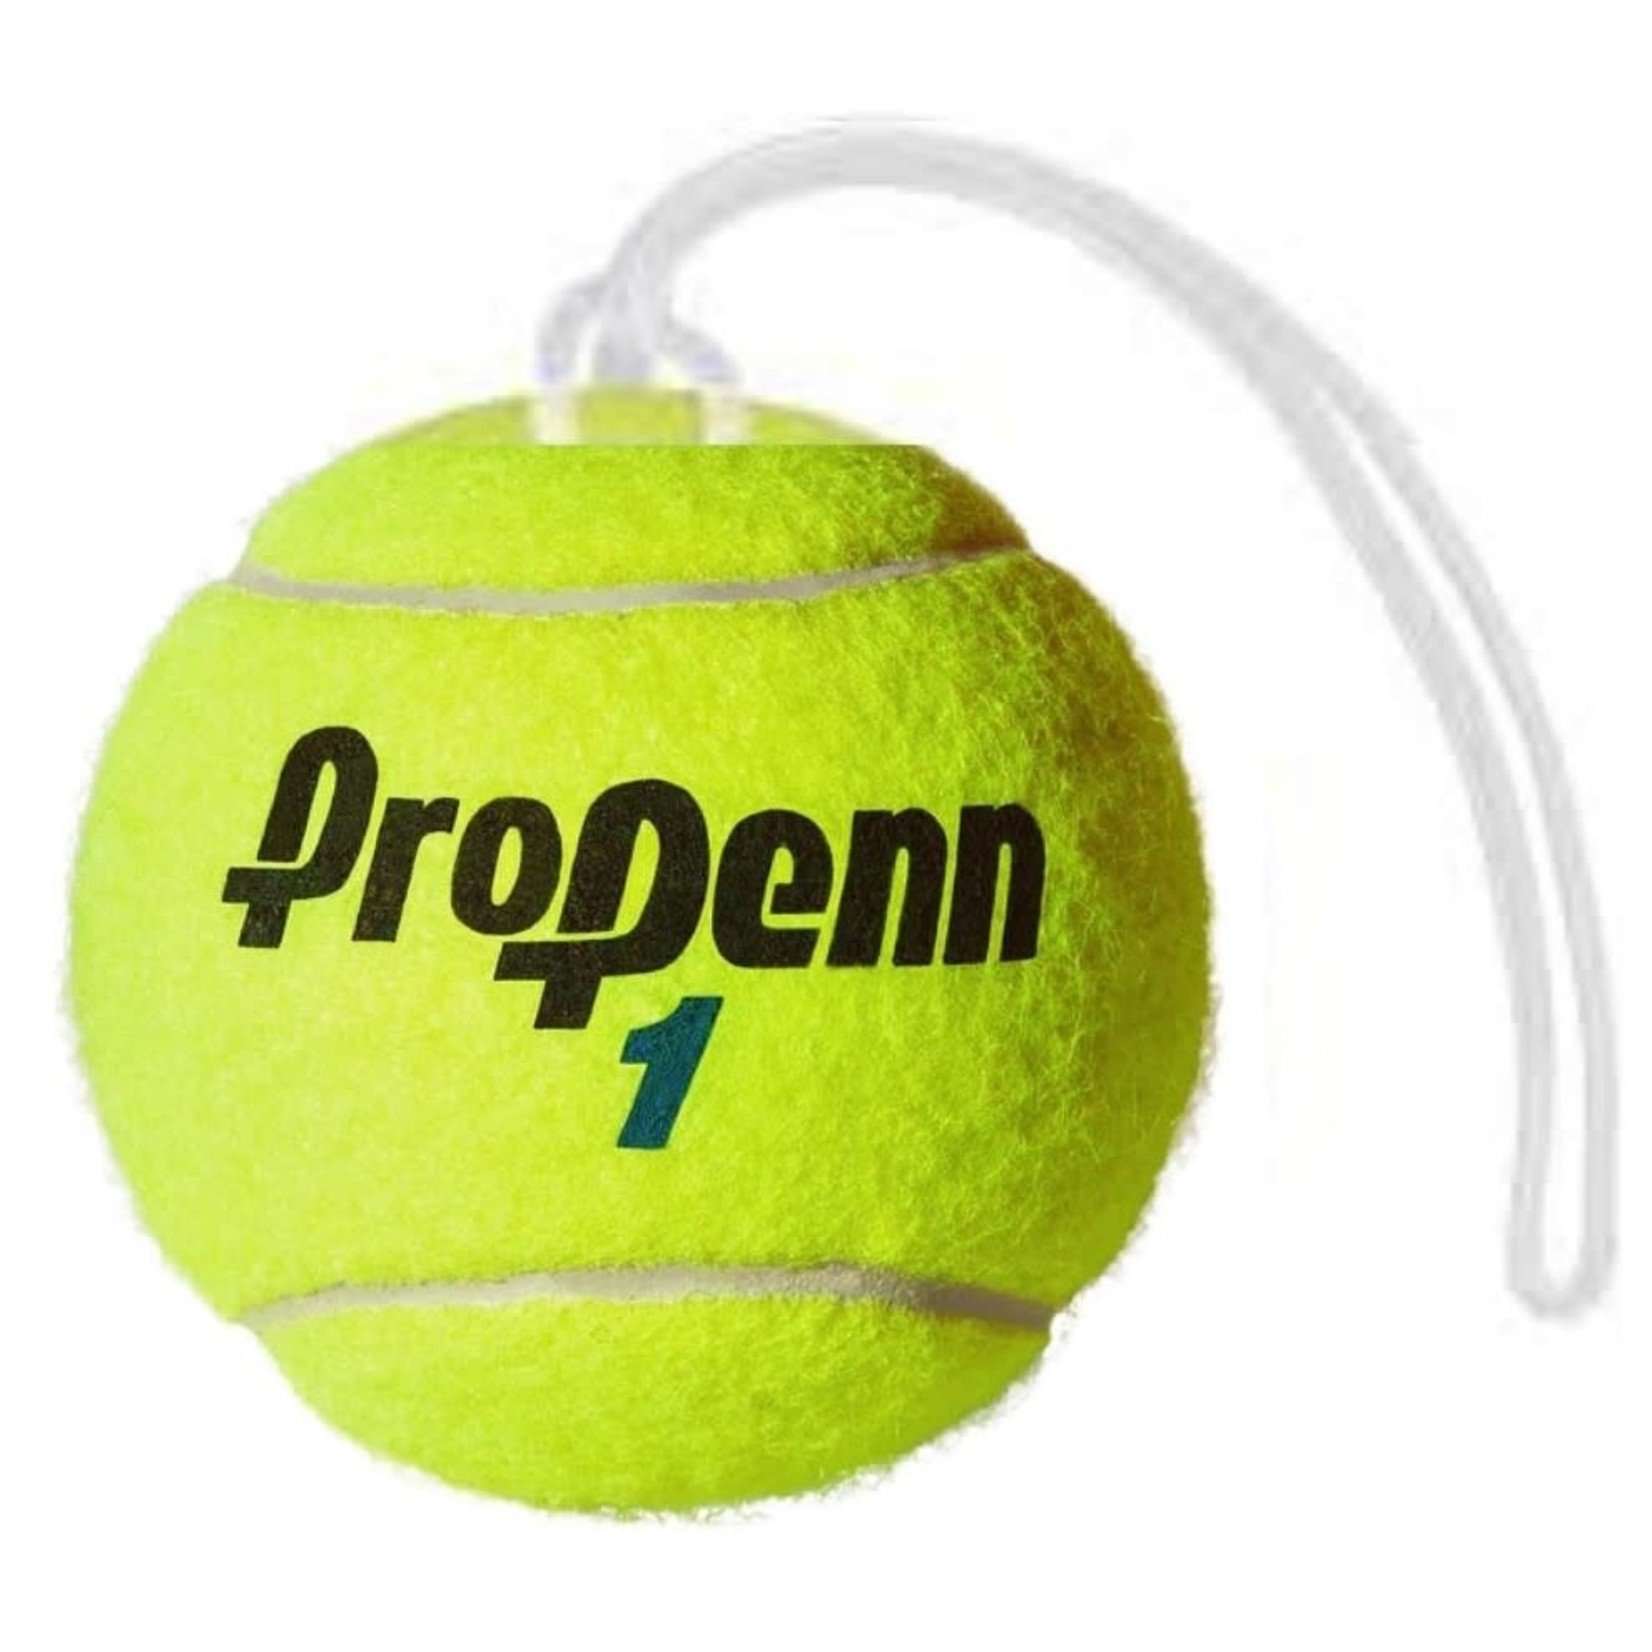 Head Head Tennis Ball Luggage Tag